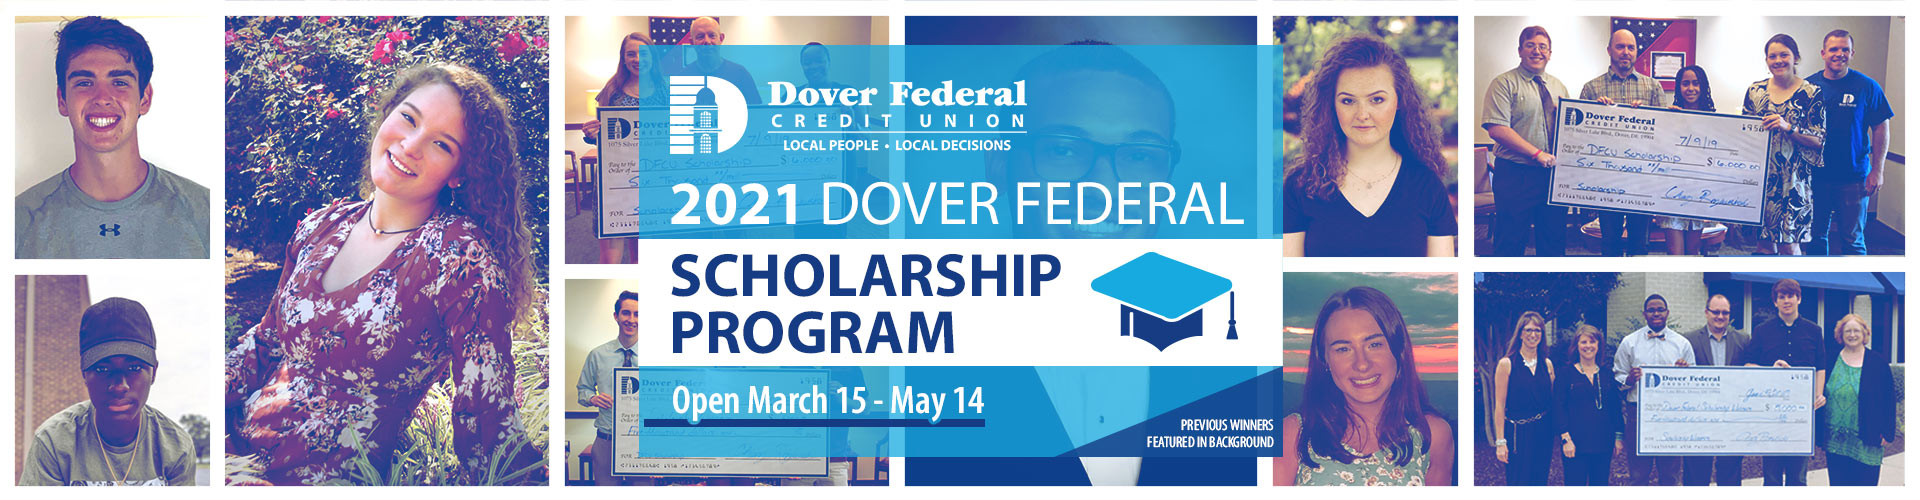 2021 Dover Federal Scholarship Program